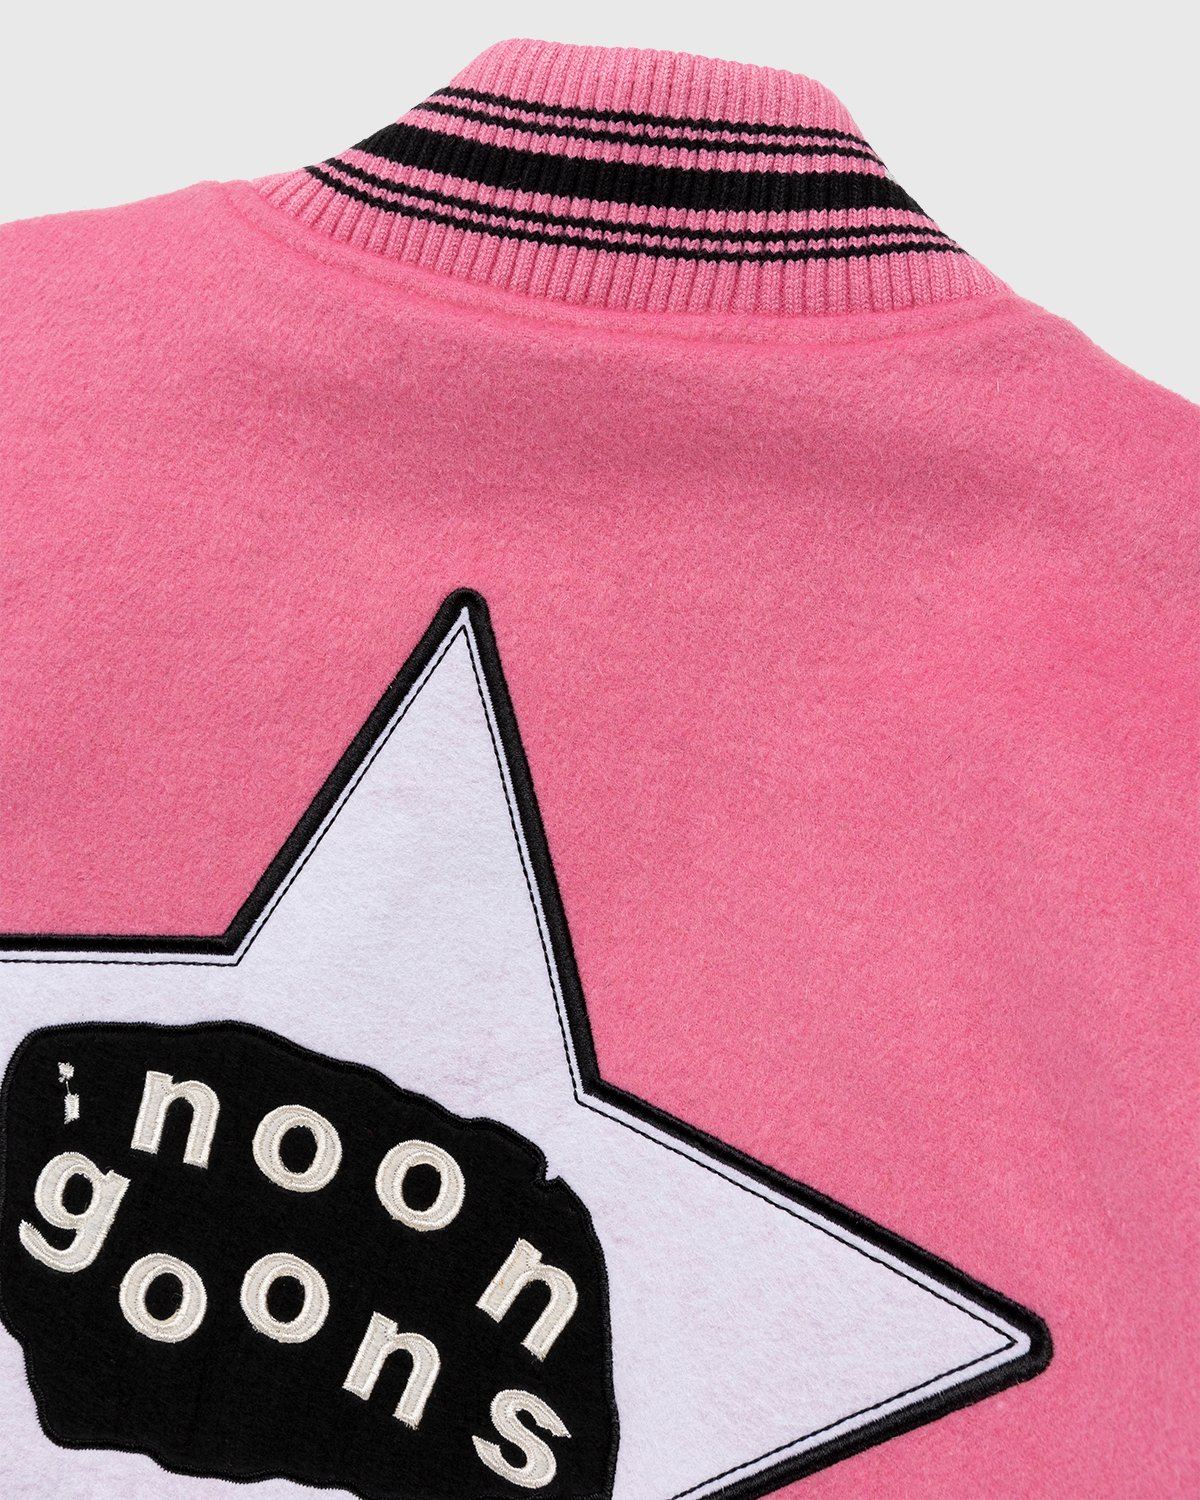 Noon Goons - Hollywood High Varsity Jacket Pink/Black - Clothing - Black - Image 5